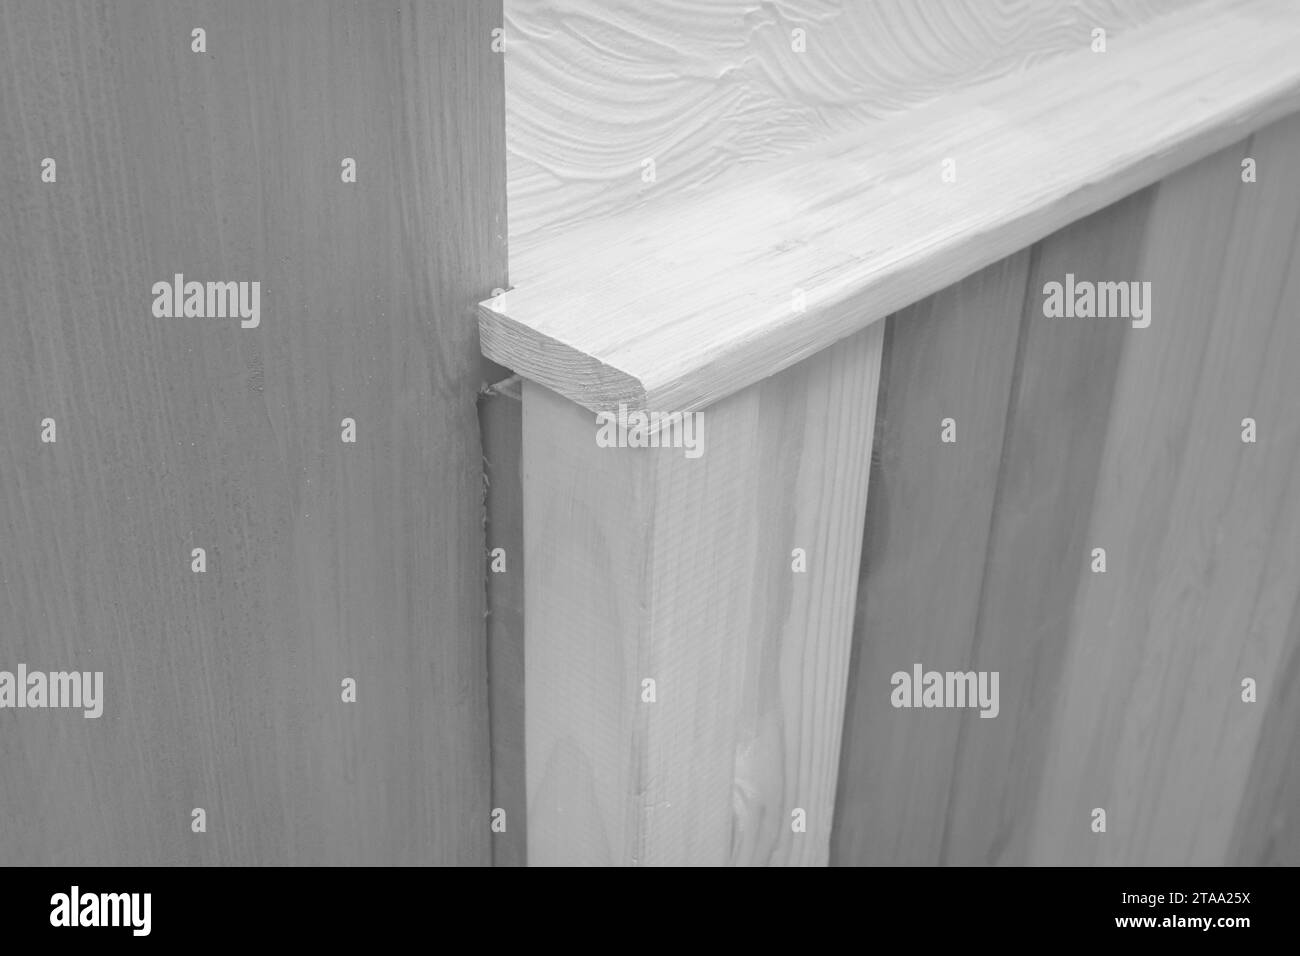 Wooden colored boards corner joint interior decor material decoration design grey. Stock Photo